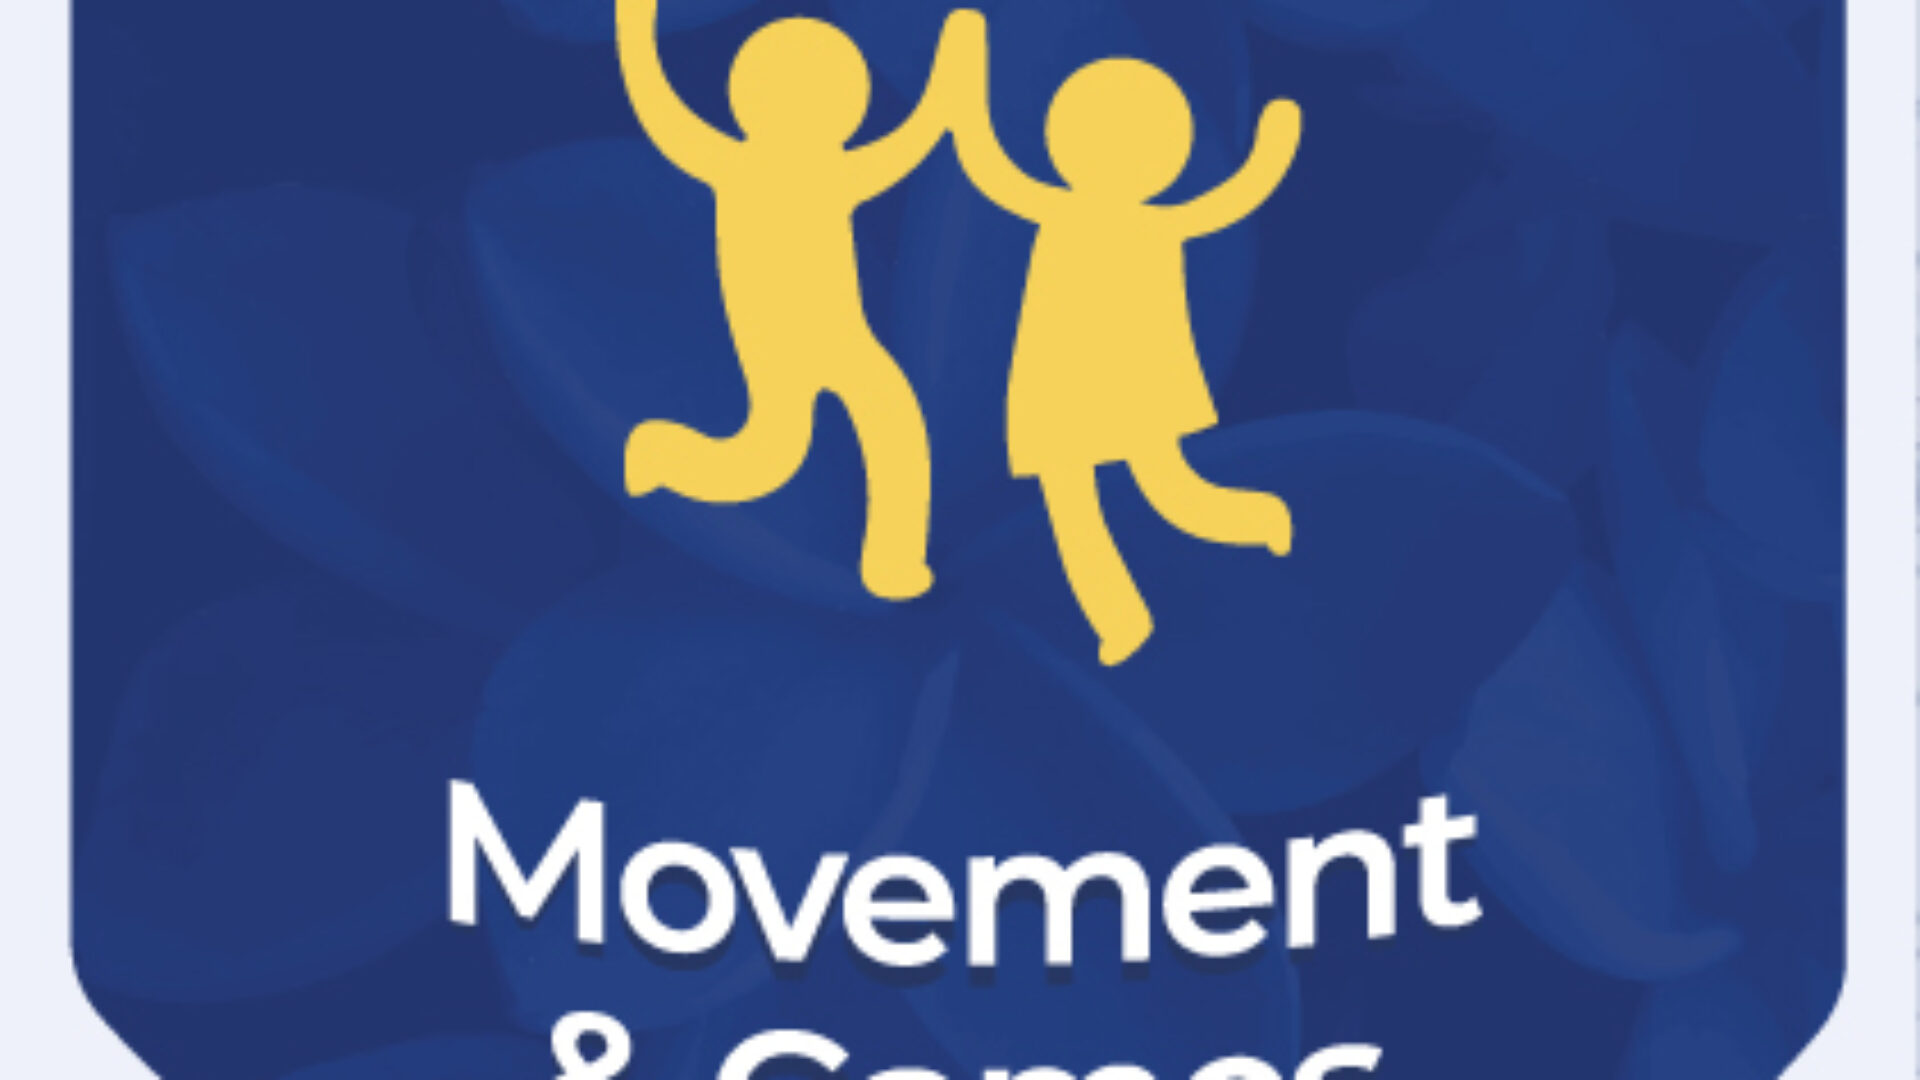 Movement & Games